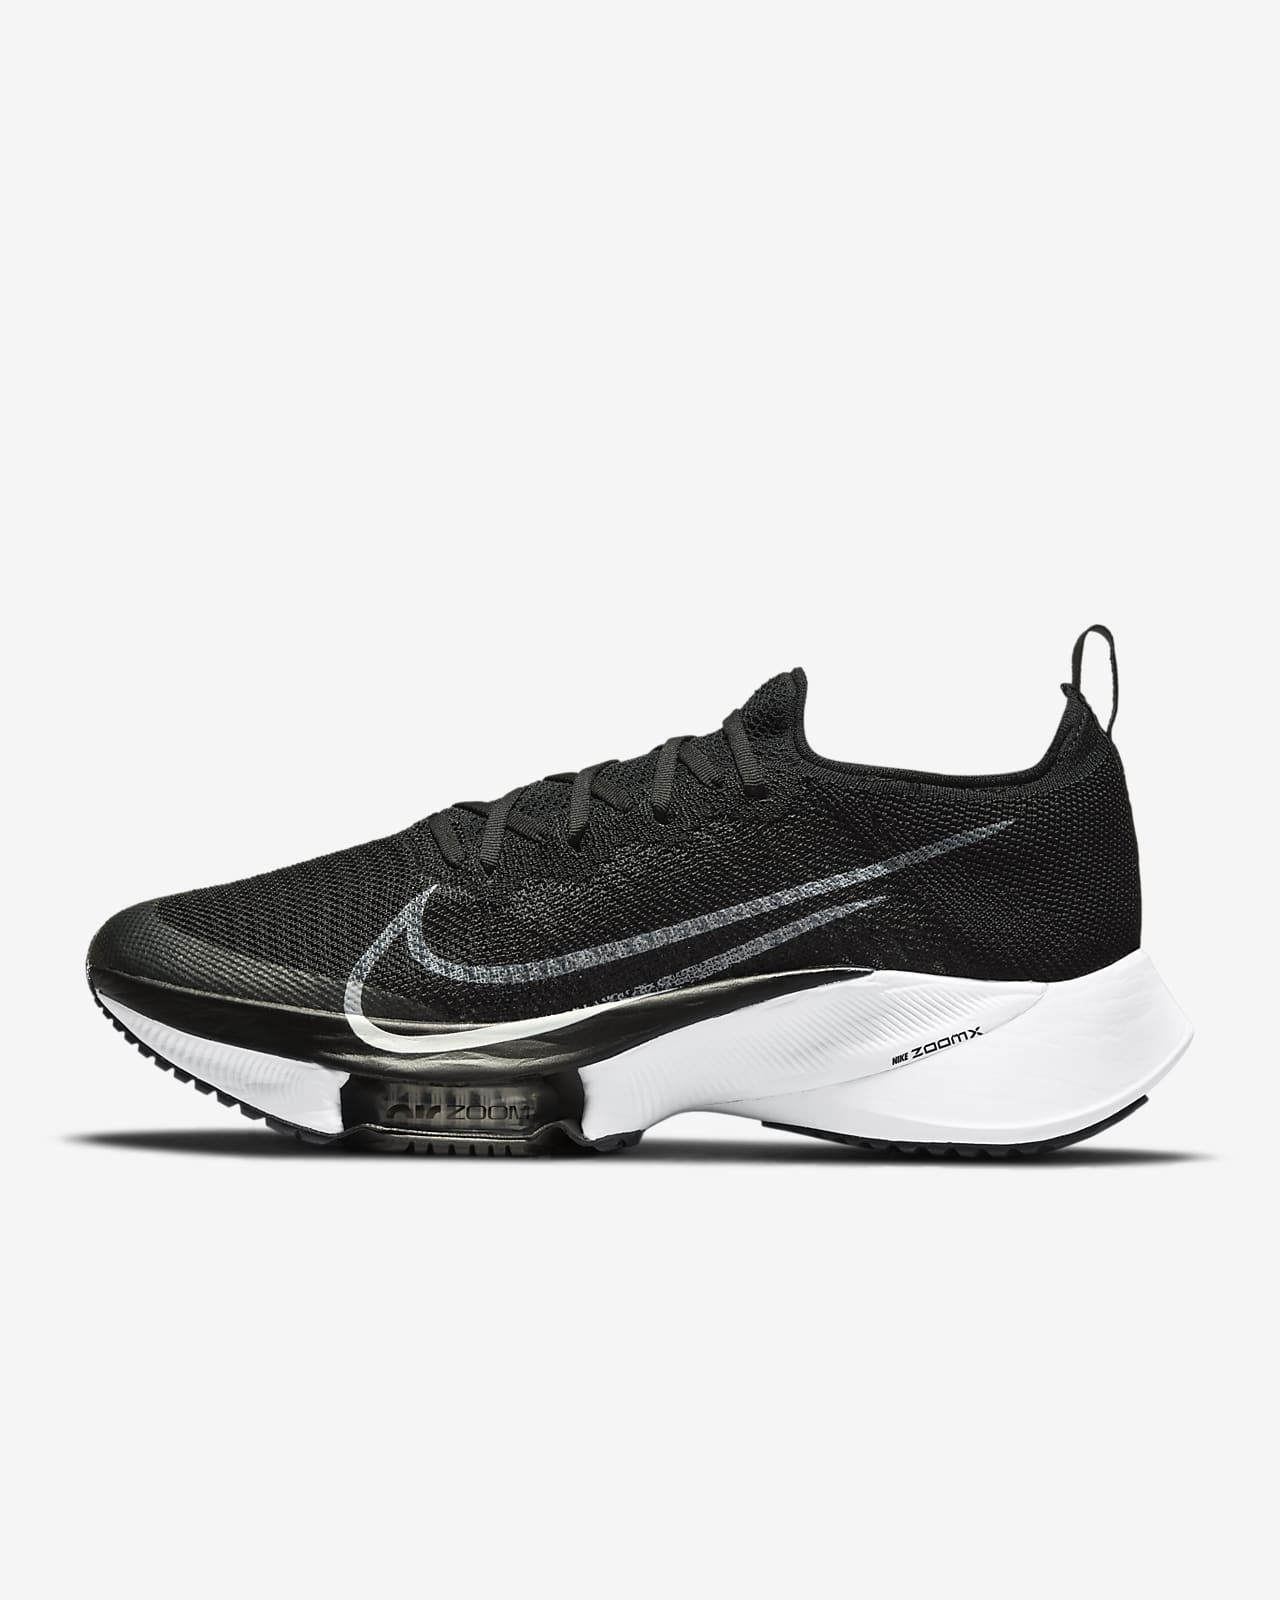 Chaussure de running sur route Nike Air Zoom Tempo NEXT% pour Homme